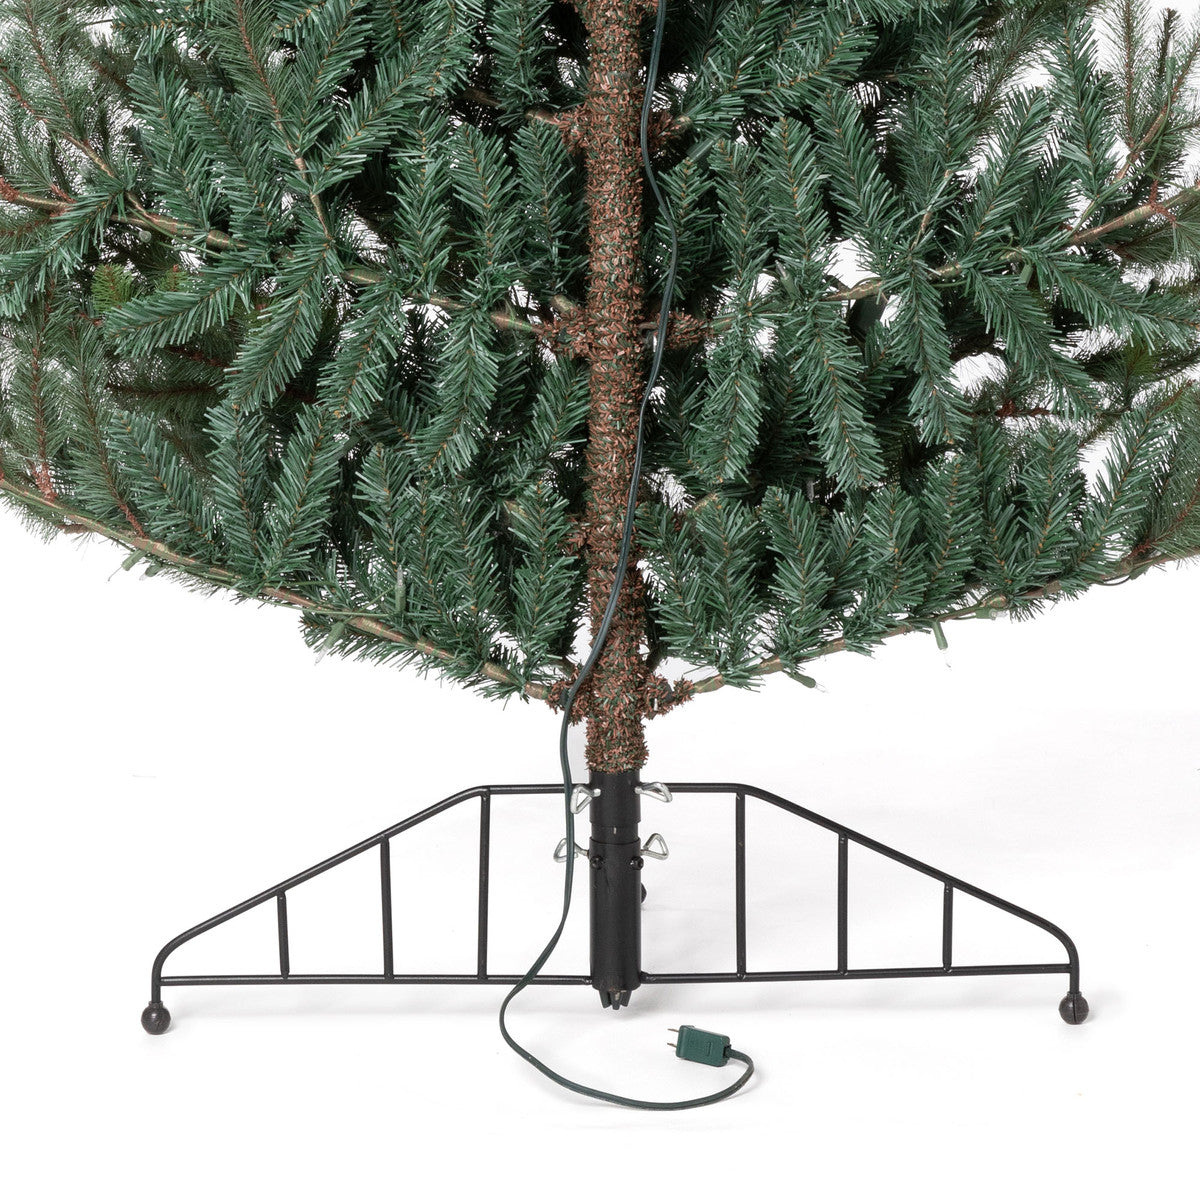 Park Hill Blue Spruce Half Back Christmas Tree, 7.5'